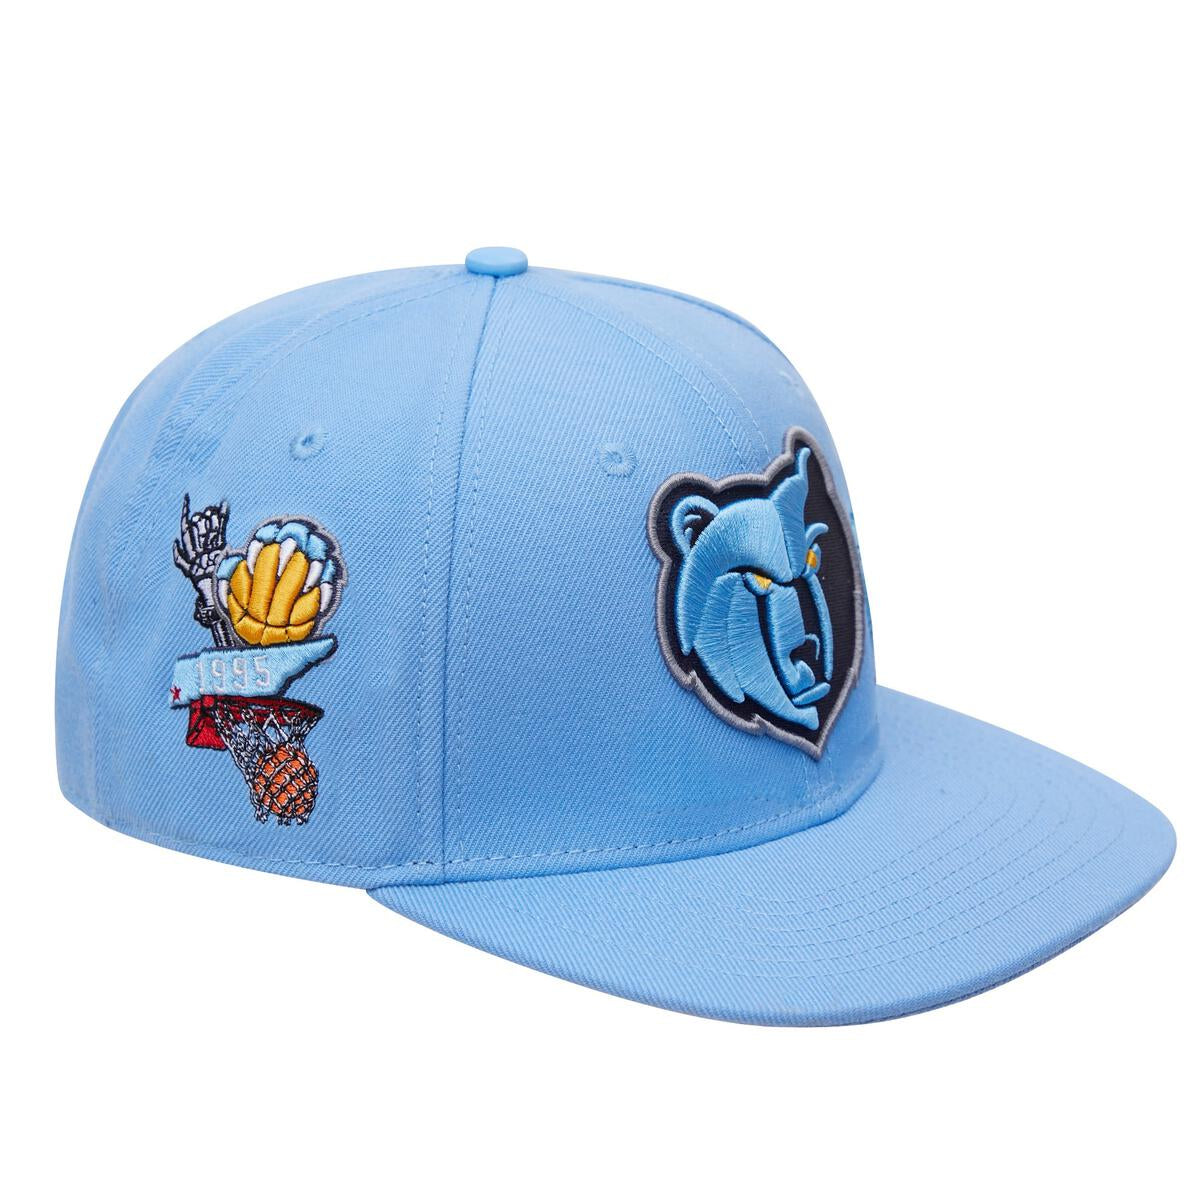 Memphis Grizzlies Hats, Grizzlies Snapback, Grizzlies Caps